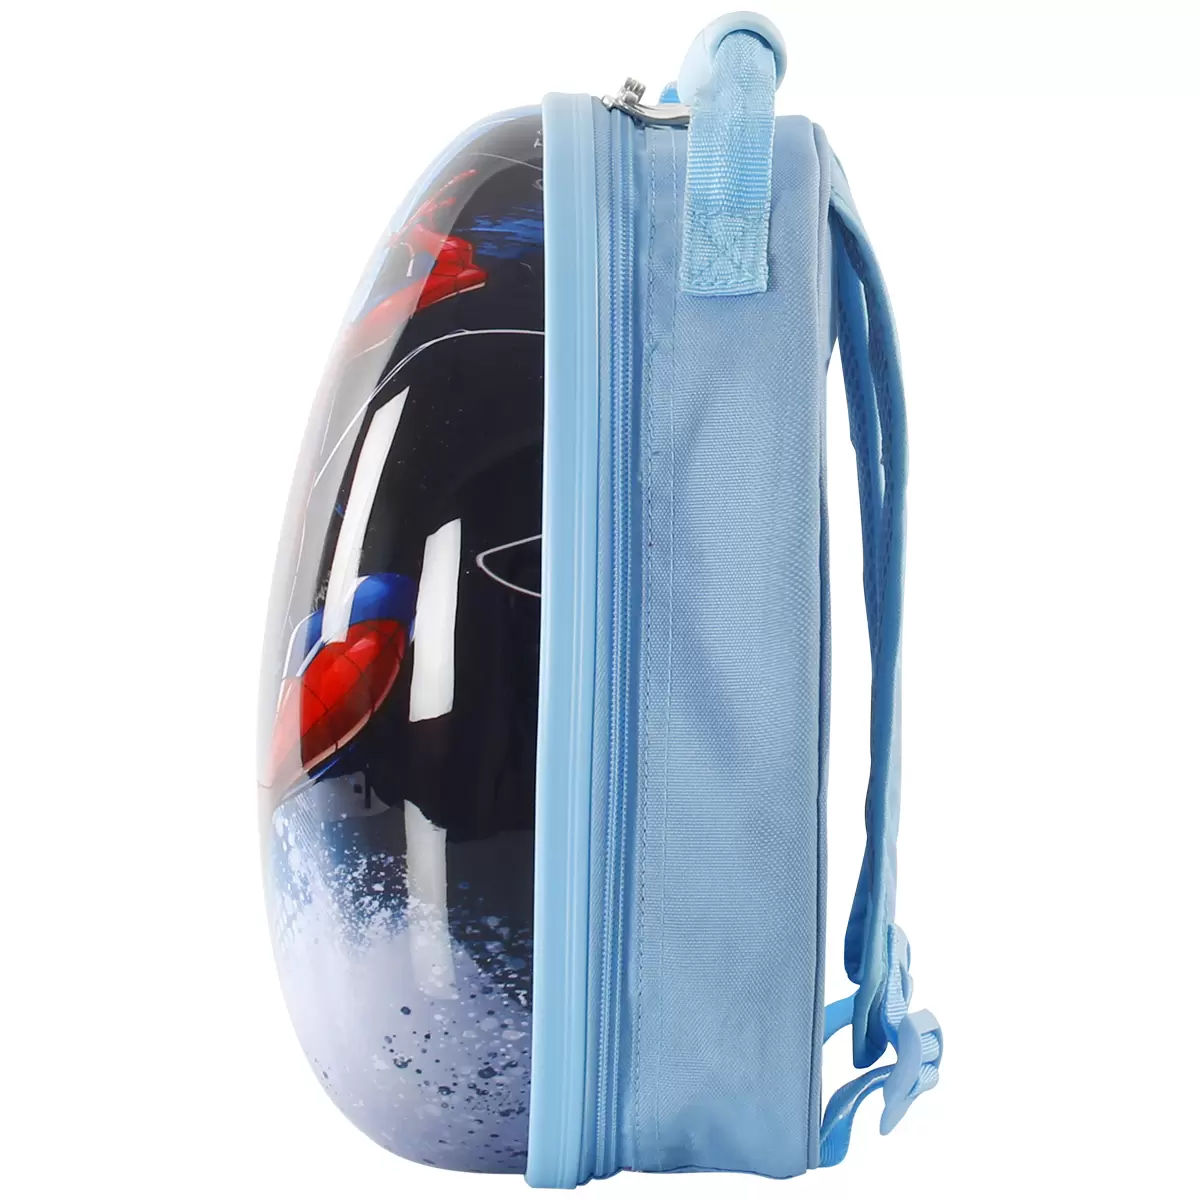 Heys Licensed Kids' 2 Piece Luggage and Backpack Set 